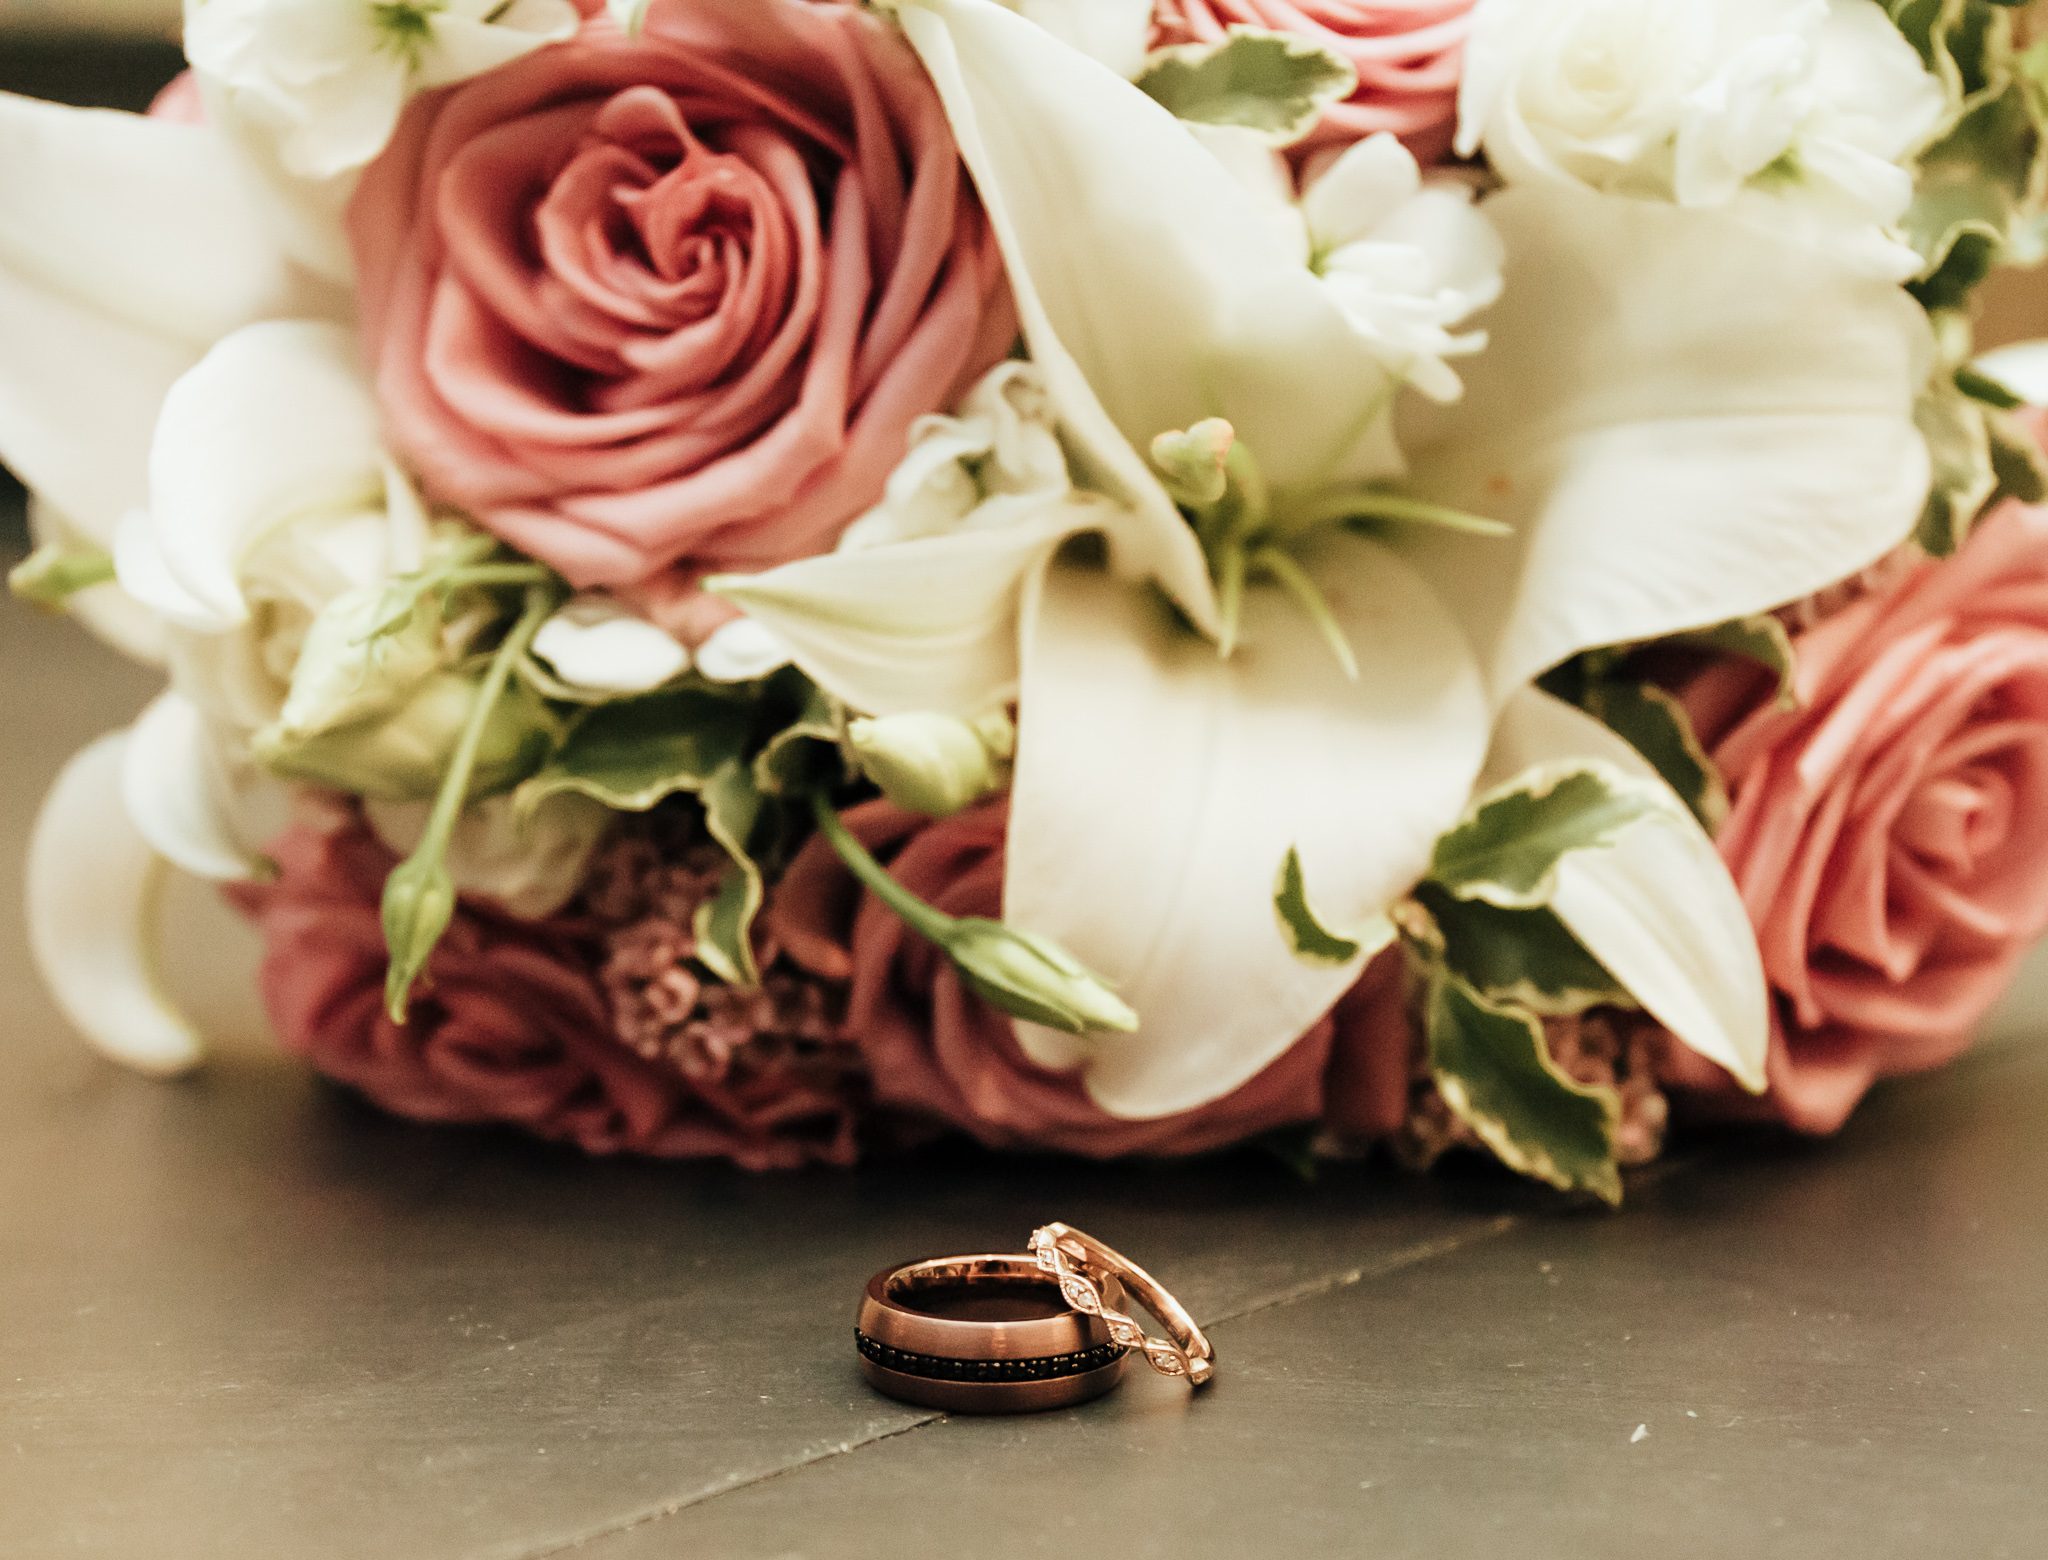 crys torres bouquet close up wedding bands locust grove estate poughkeepsie new york hudson valley wedding photography